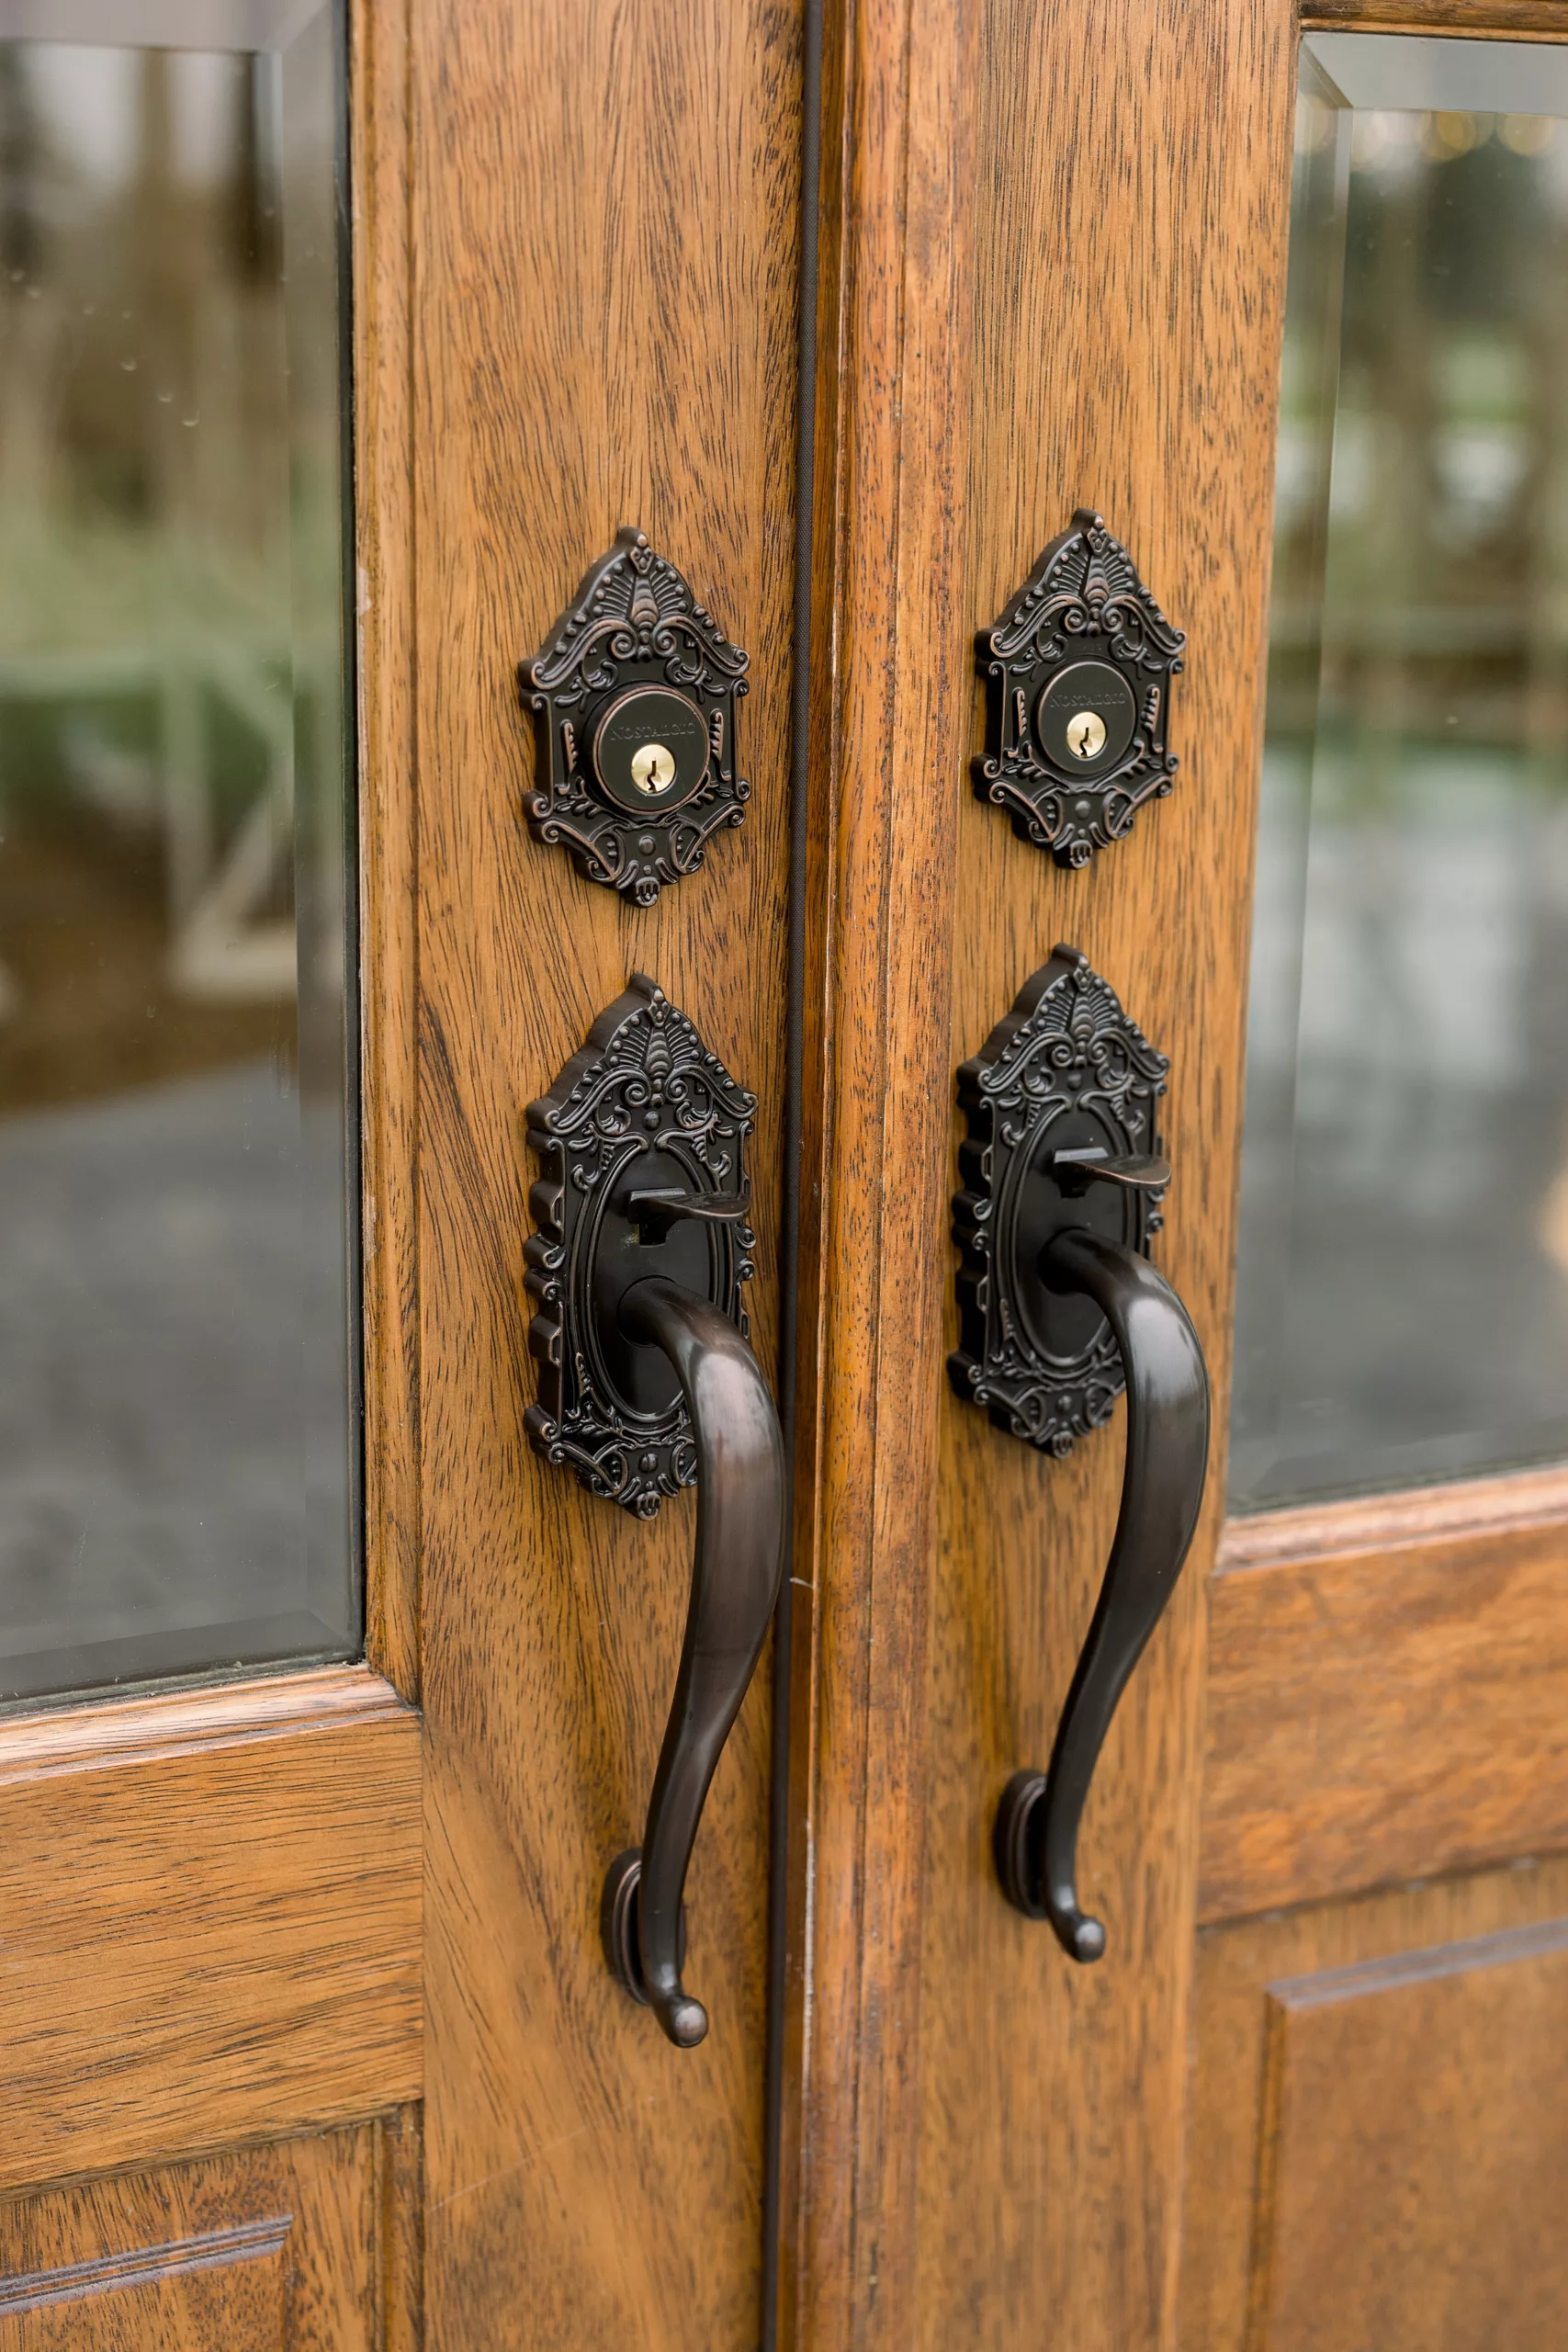 Details of ornate handles and locks on natural wood doors